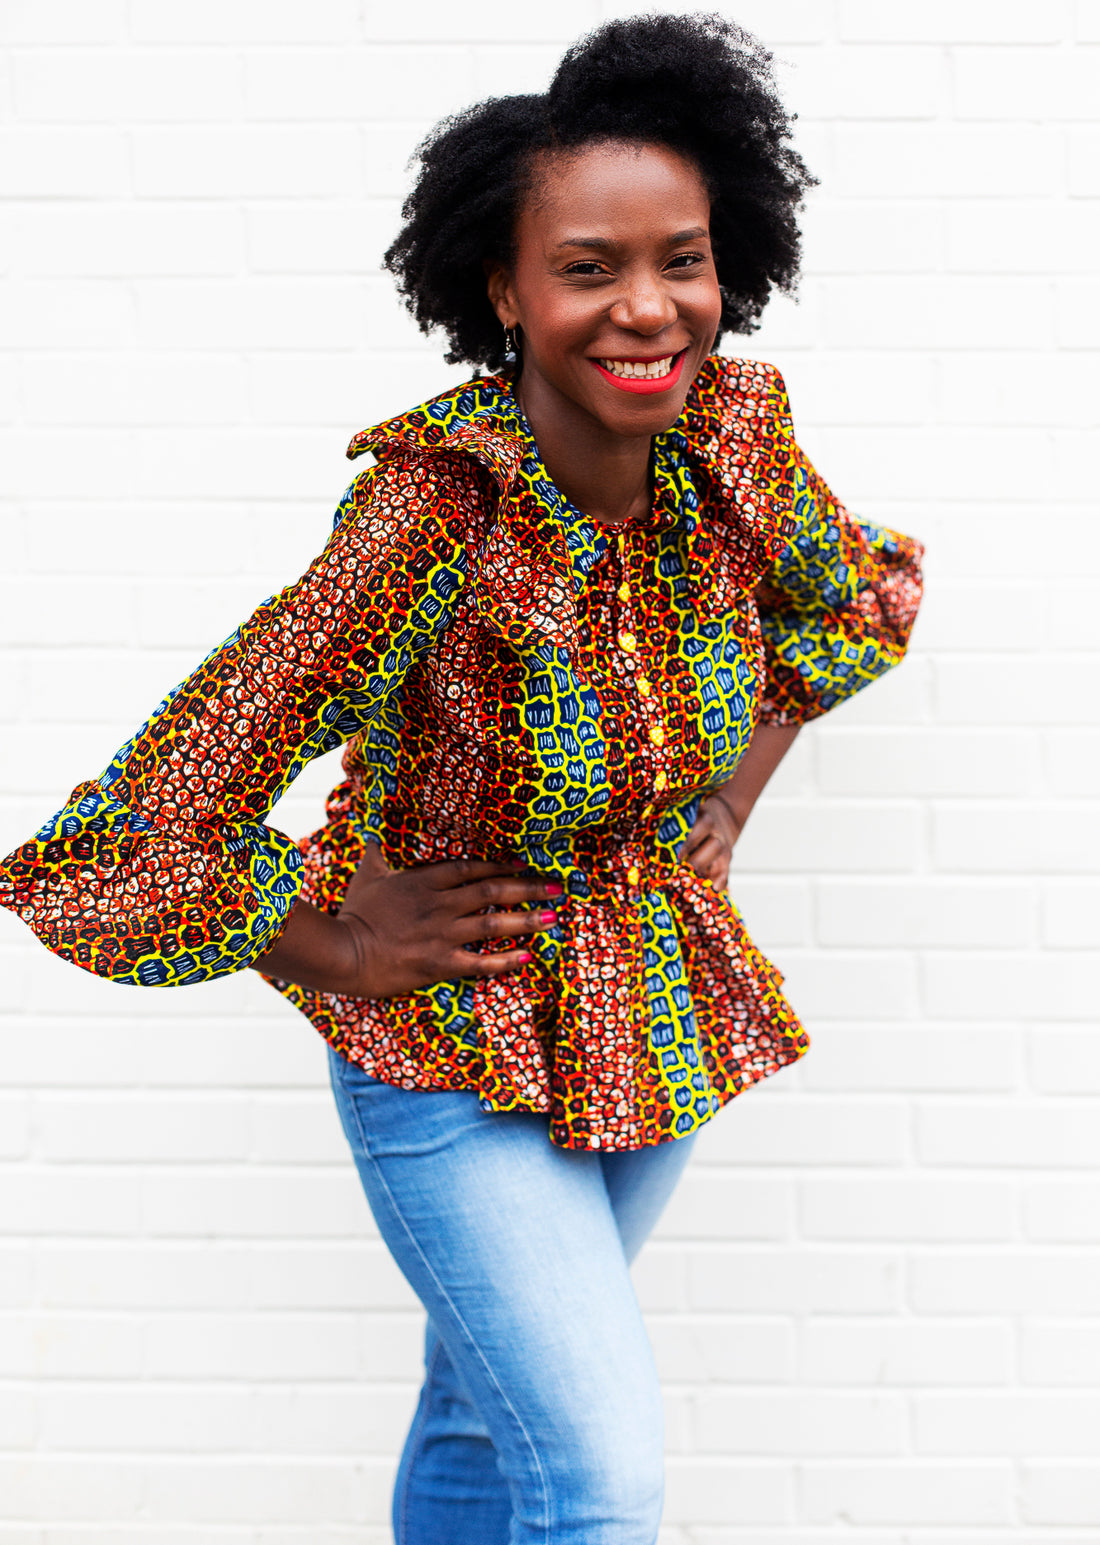 Adaku wearing the Jasmin Pemplum Blouse in african wax print fabric from Dovetailed London.